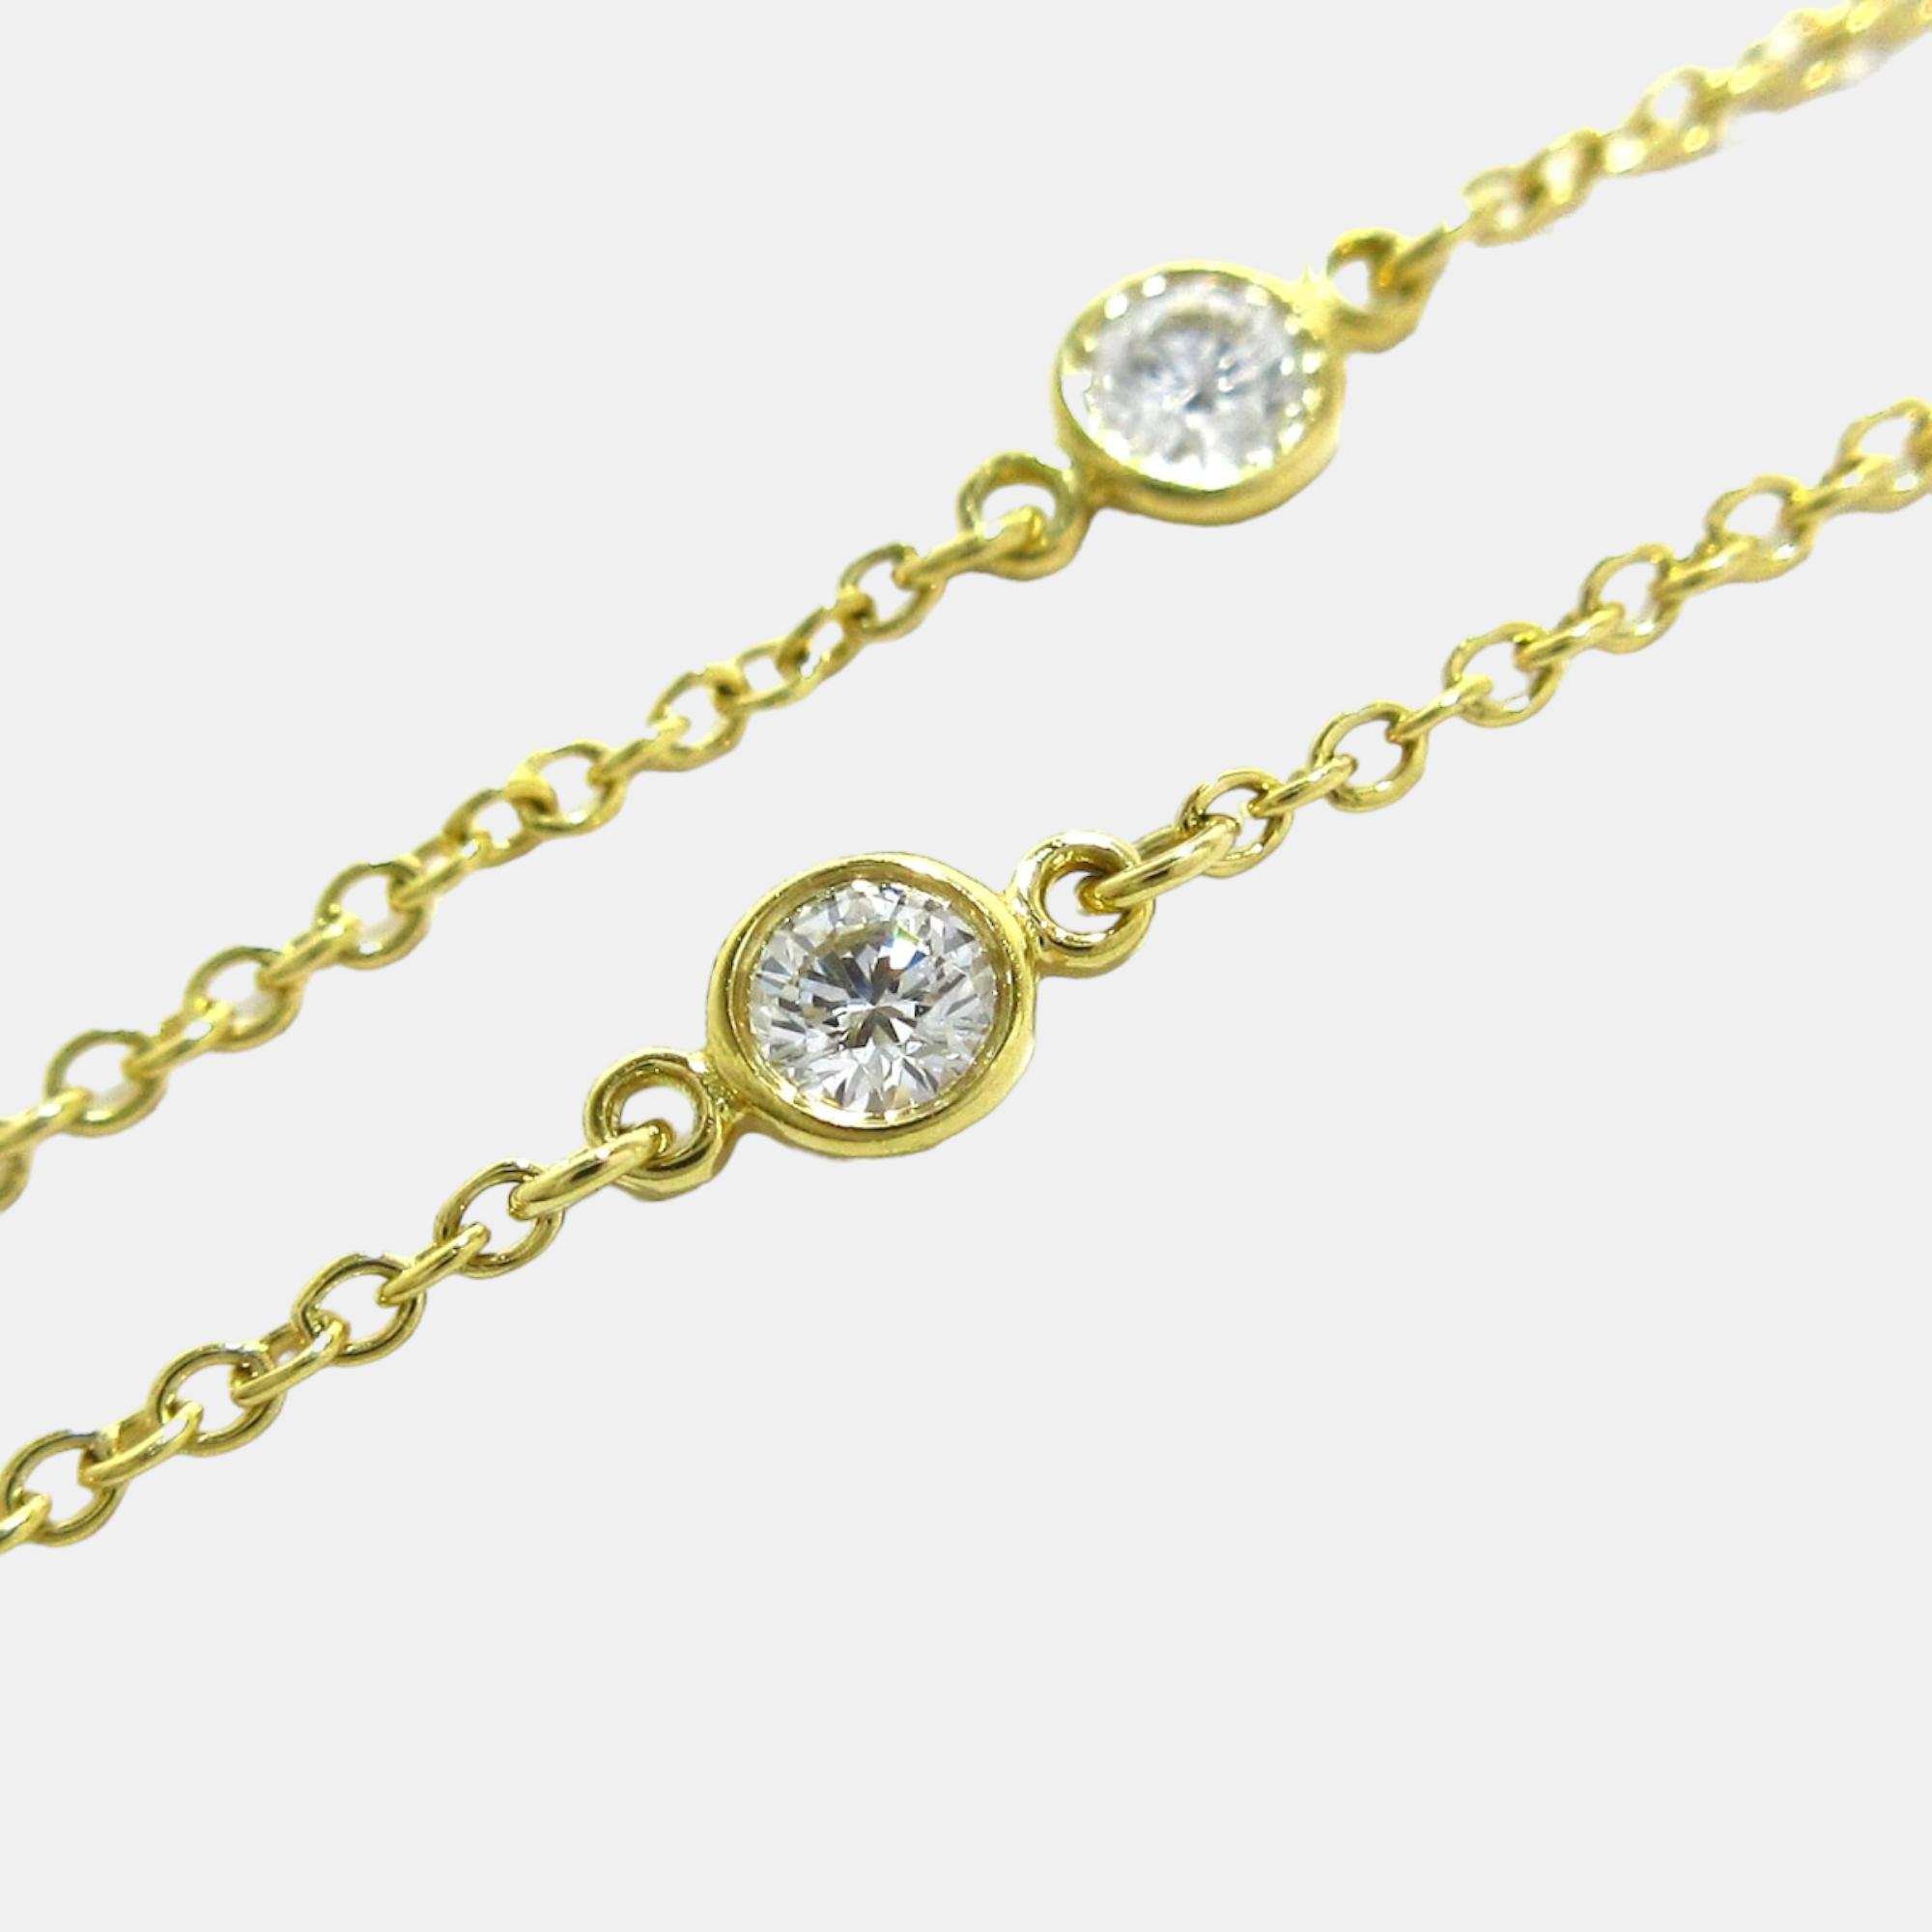 Tiffany & Co. Elsa Peretti 18K Yellow Gold Diamond Bracelet 17